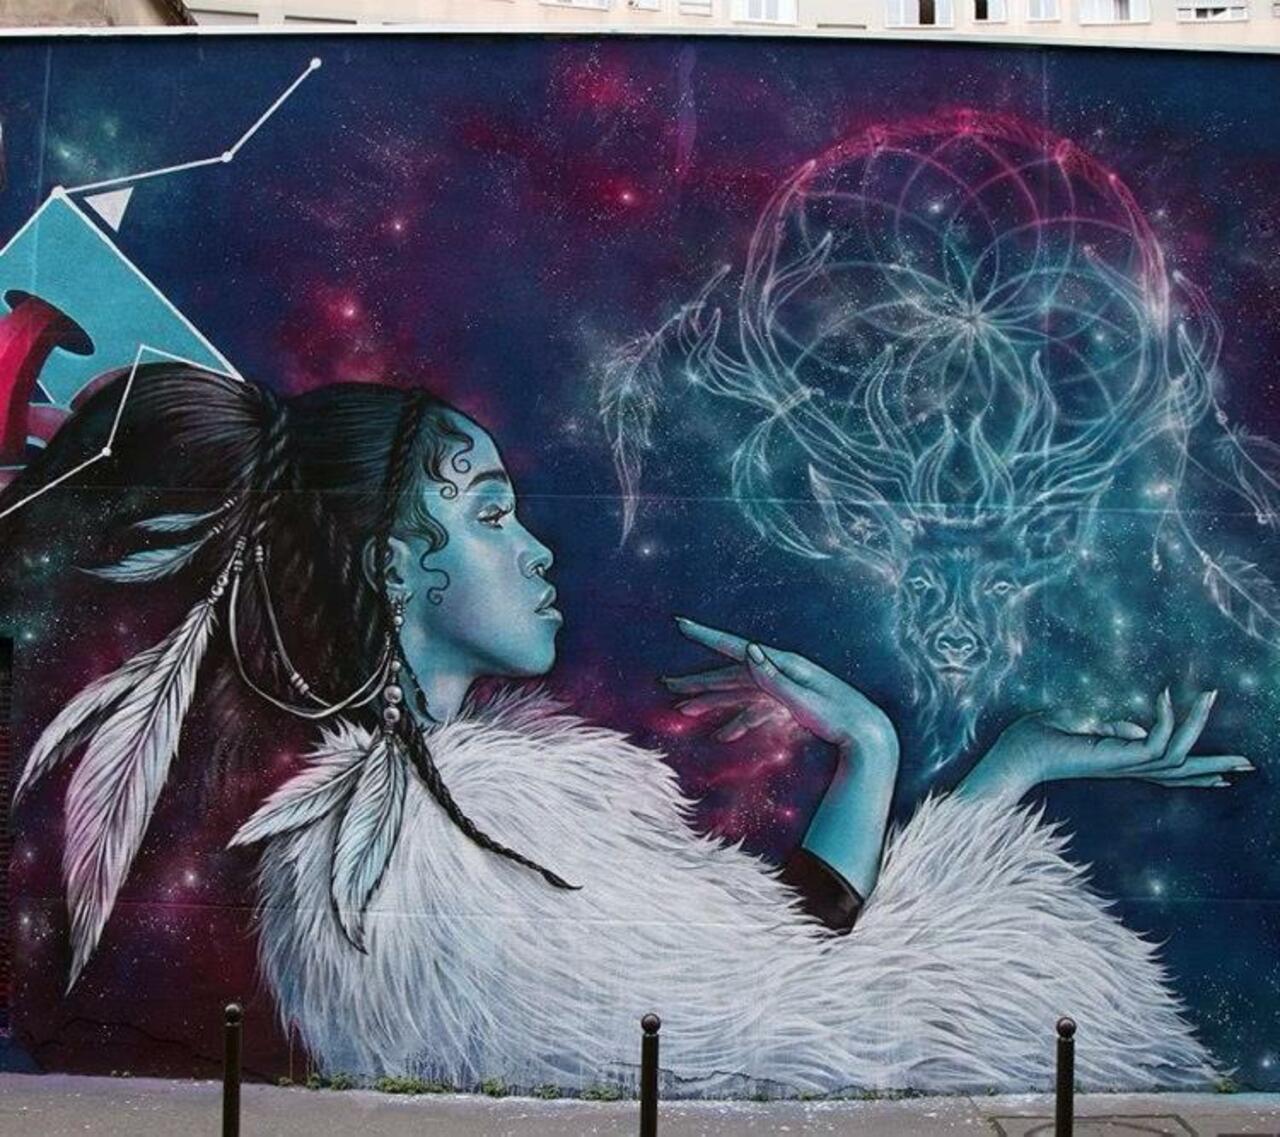 RT @designopinion: Artist Alex new Street Art mural located in Paris, France #art #mural #graffiti #streetart https://t.co/qPdFkiRlcV